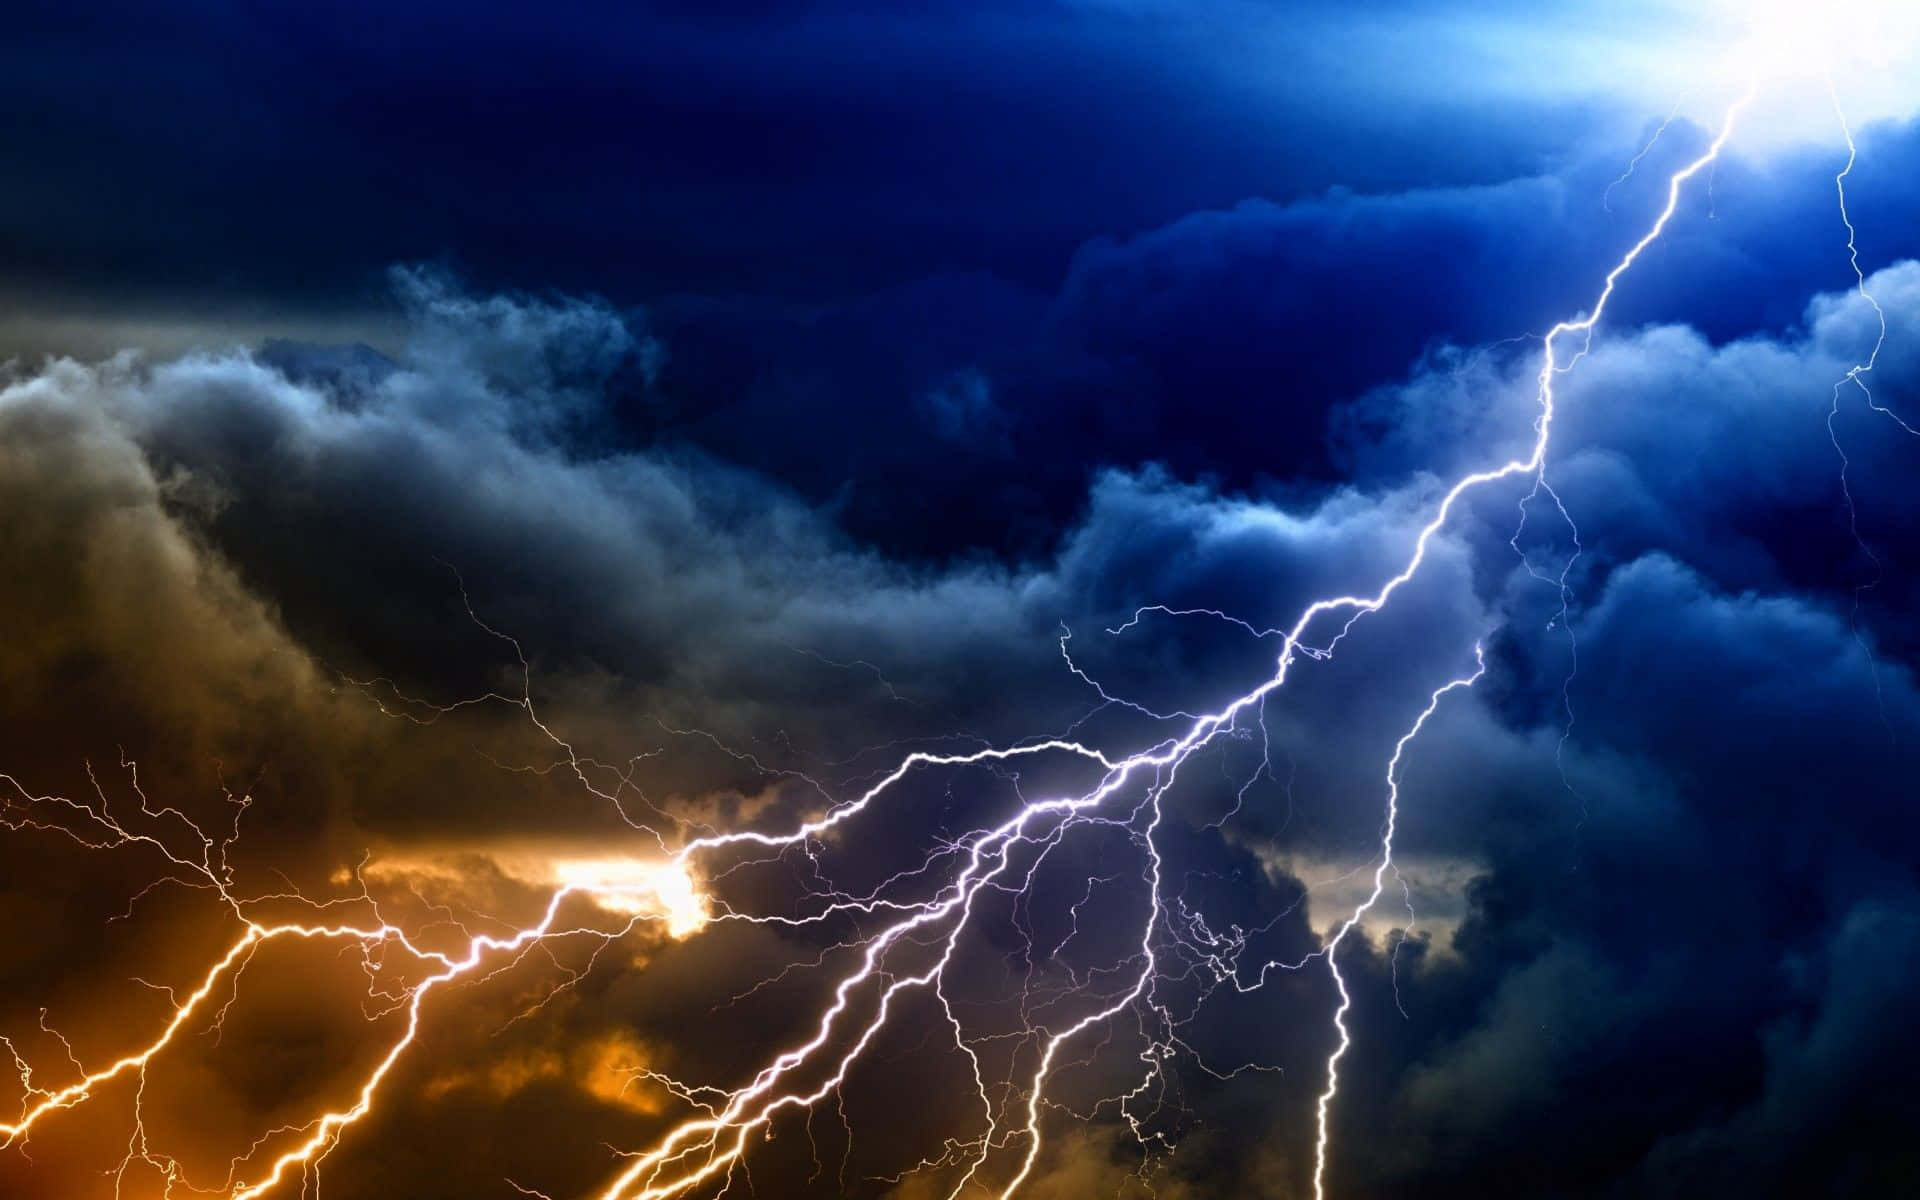 Feel the energy of a powerful thunder storm.